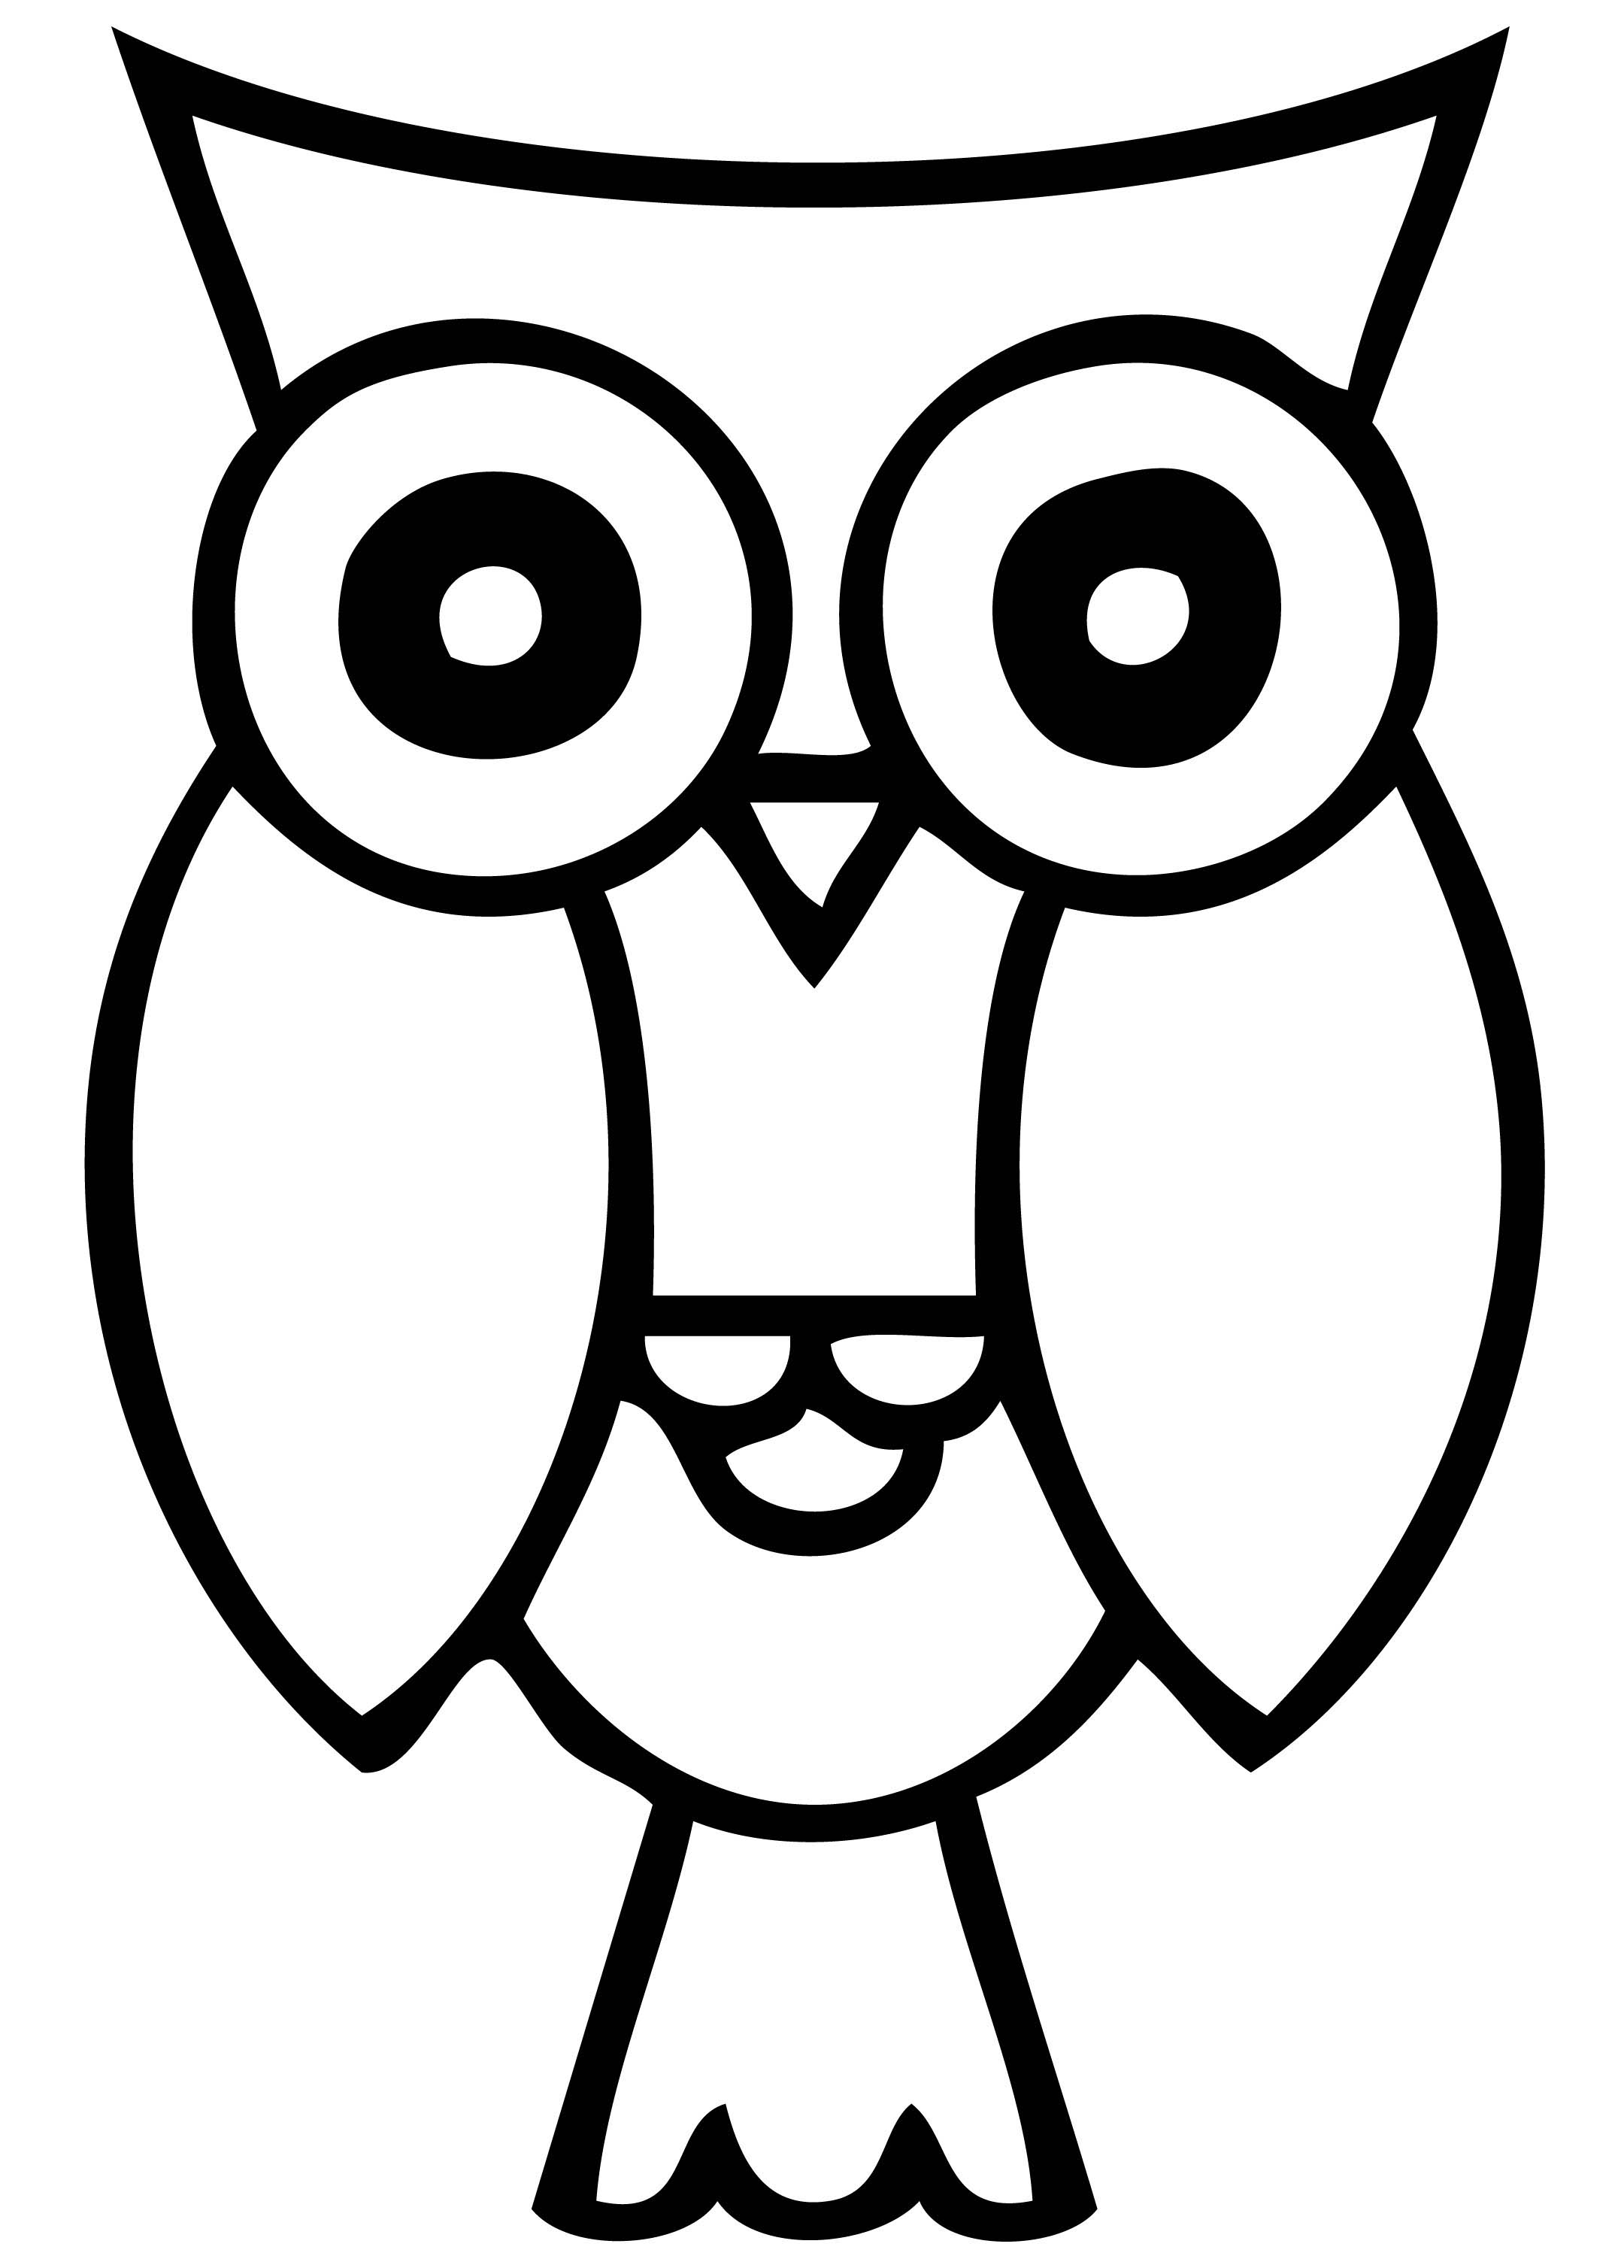 wise owl clip art free - photo #48